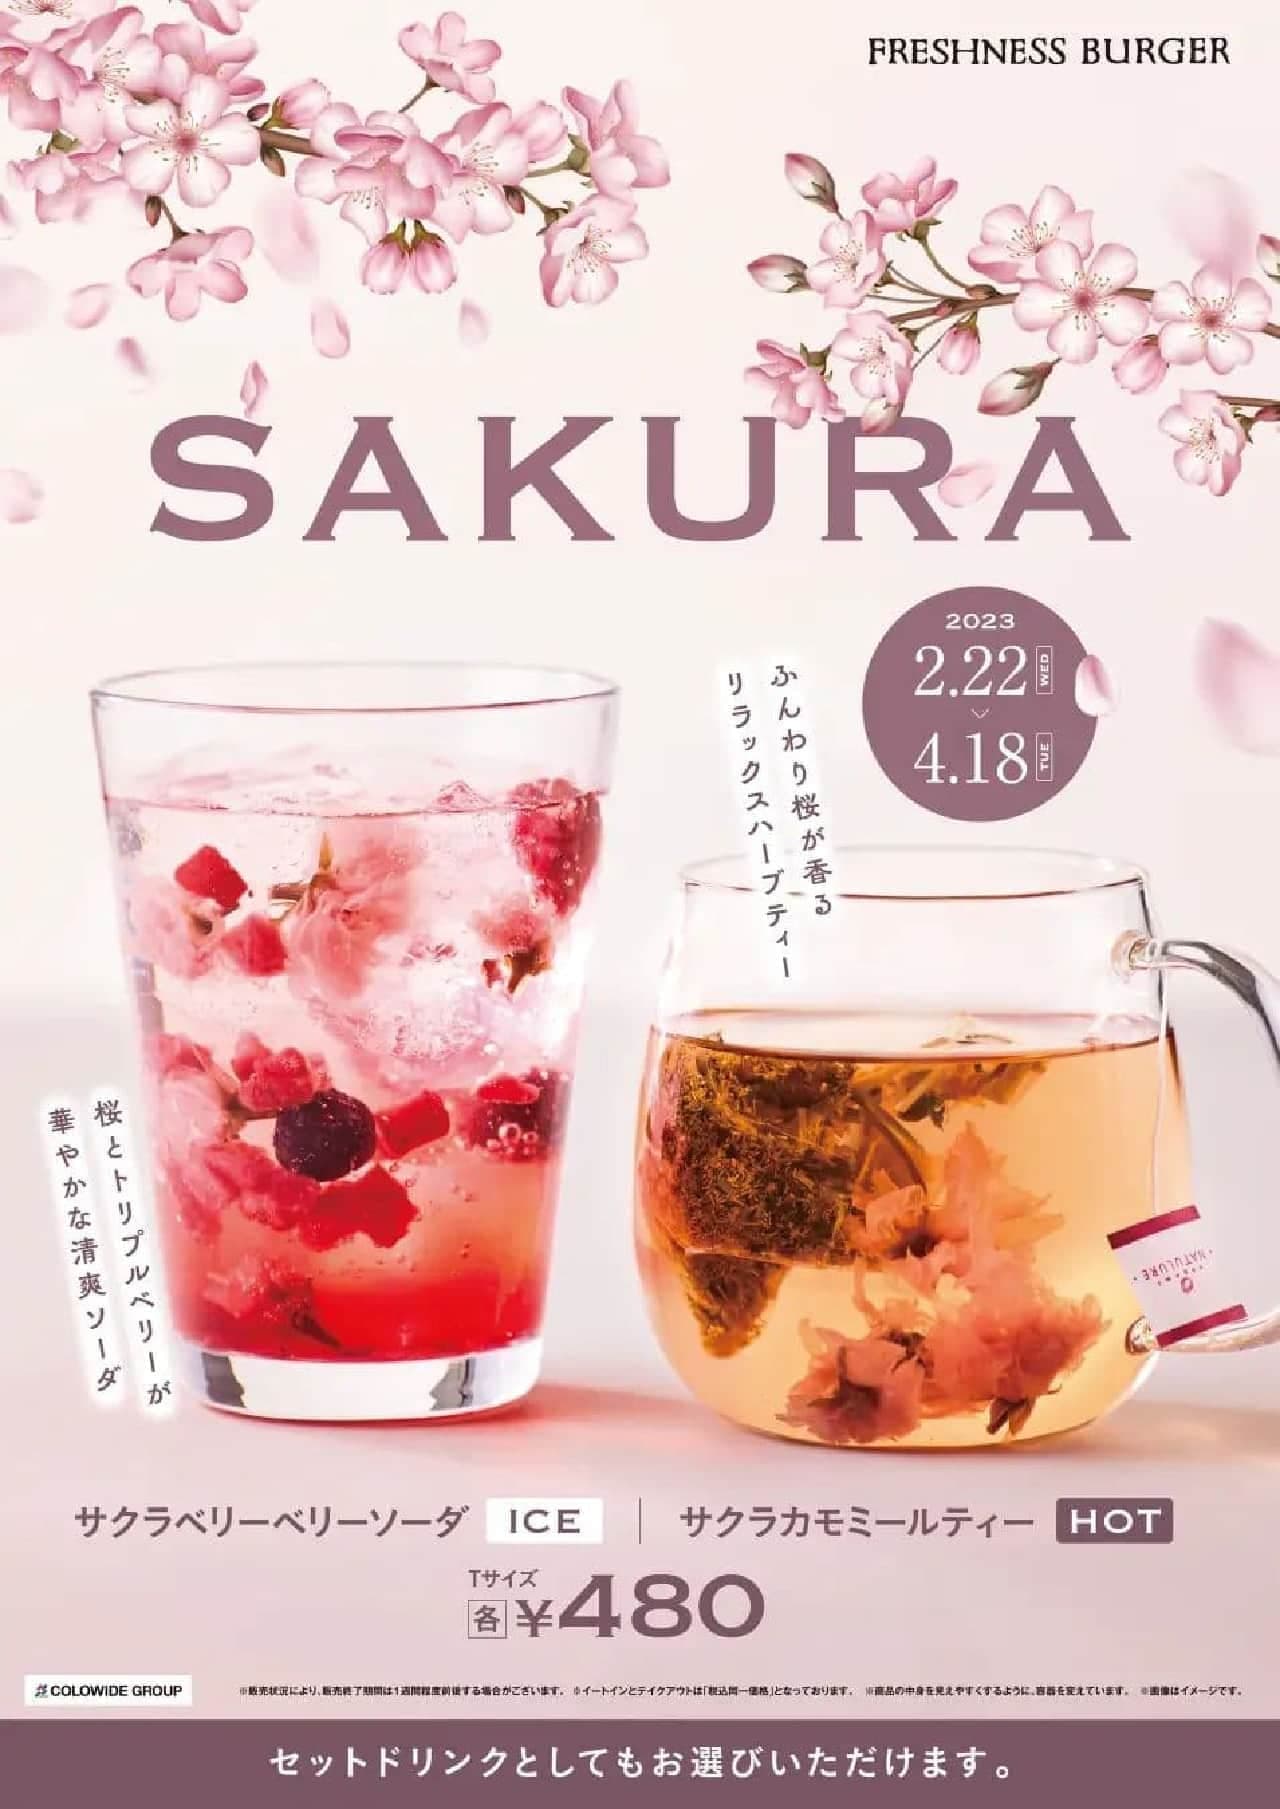 Freshness Burger "Sakura Berry Soda" and "Sakura Chamomile Tea